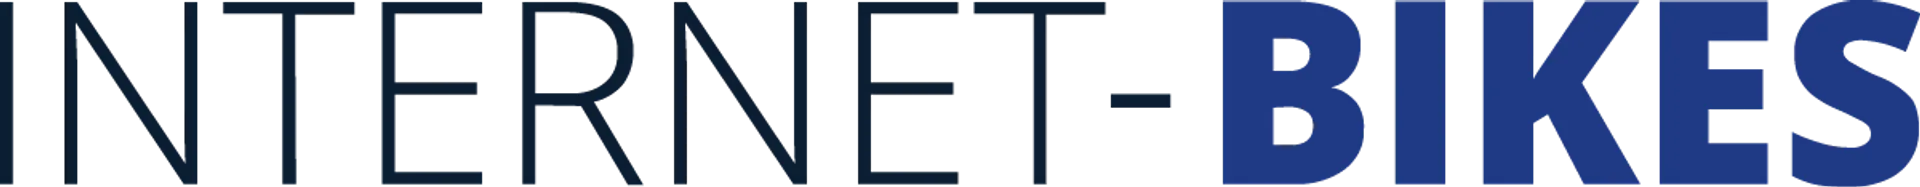 INTERNET BIKES logo